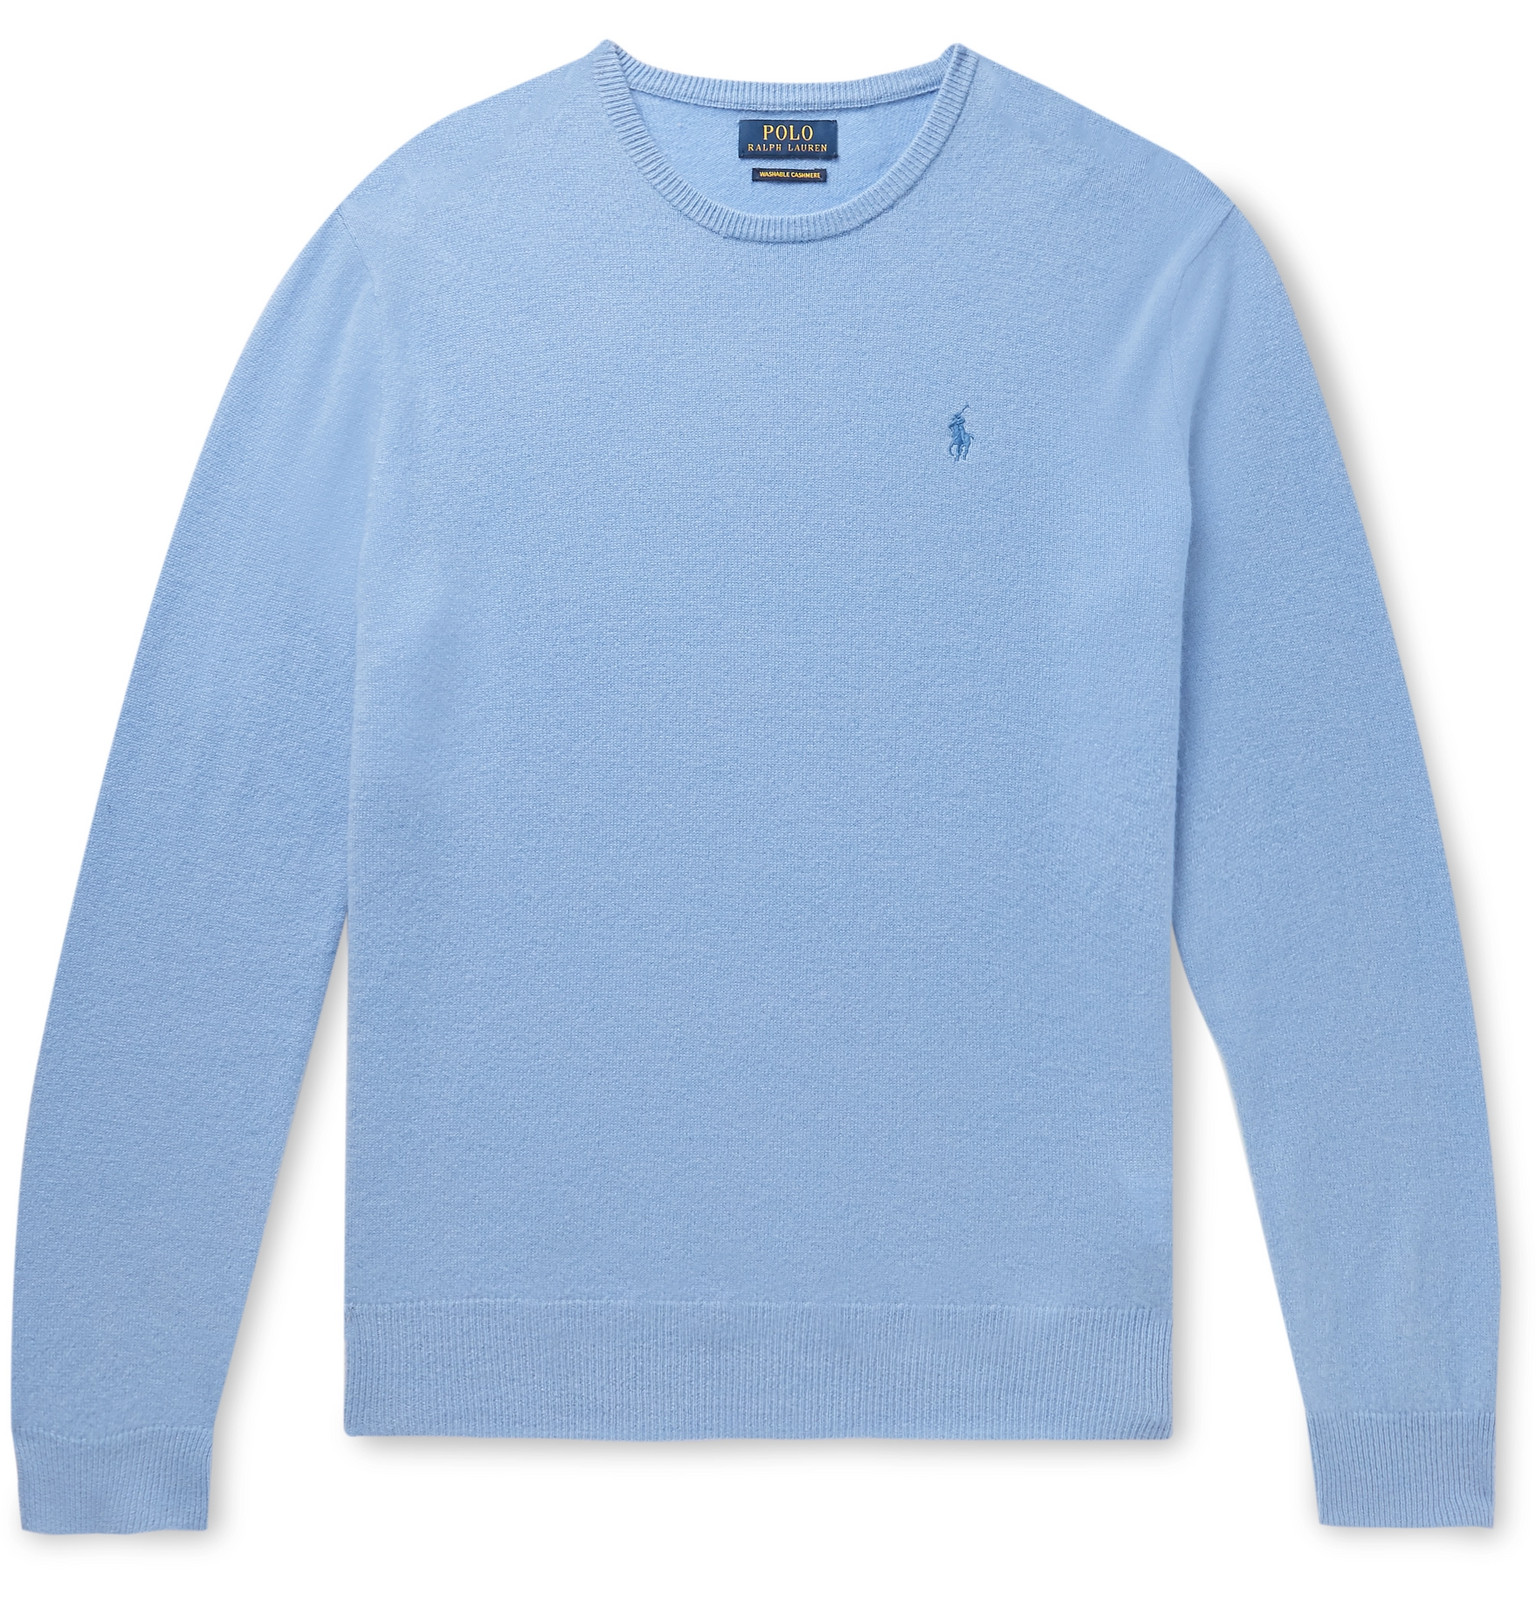 polo blue sweater